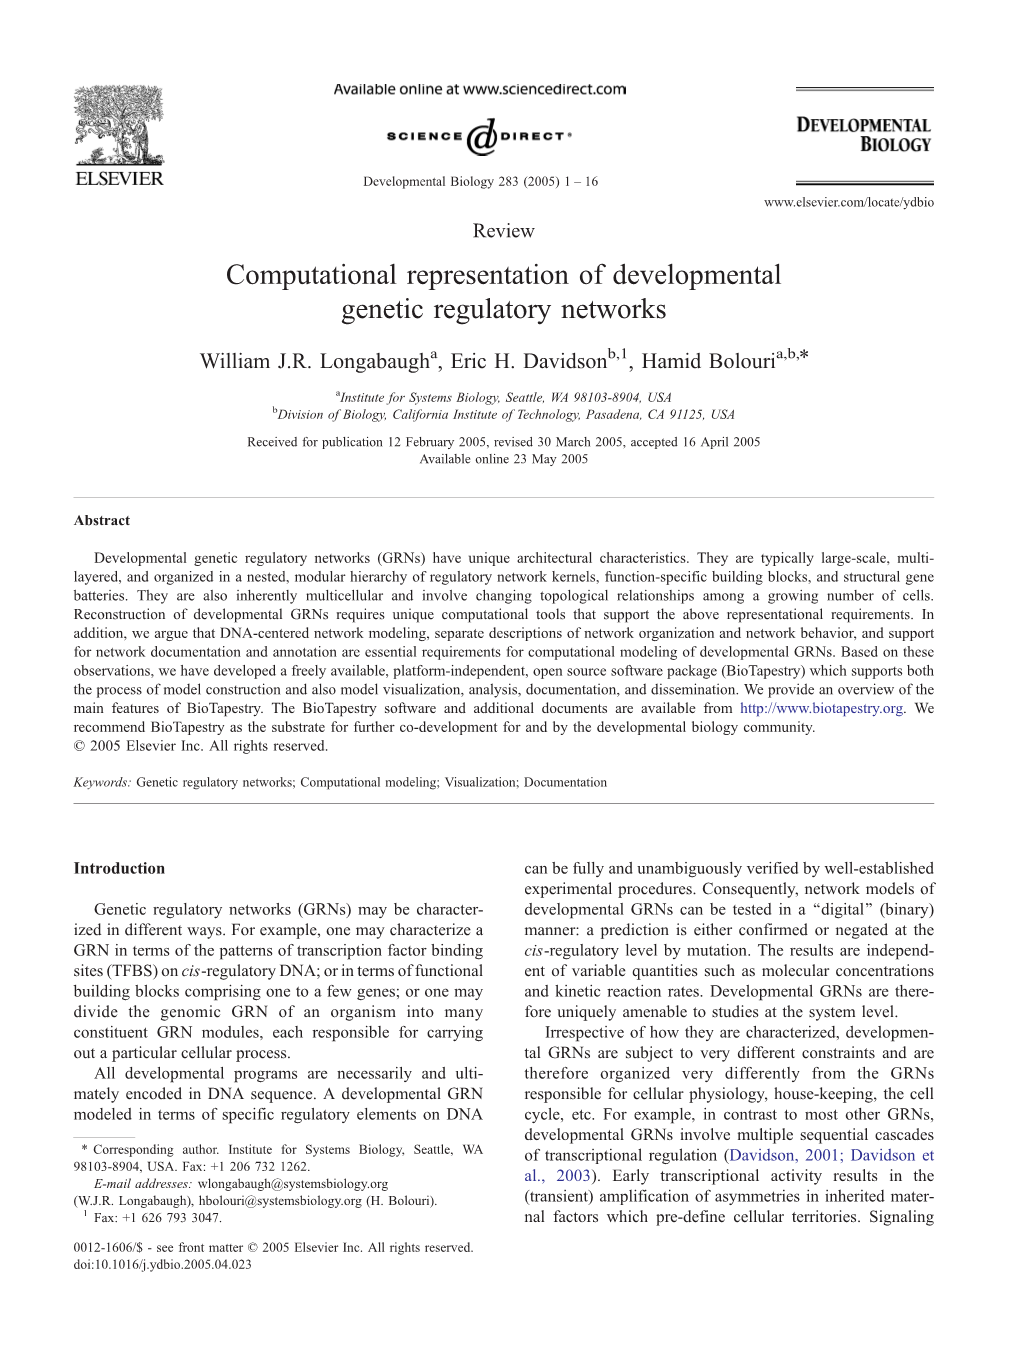 Computational Representation of Developmental Genetic Regulatory Networks